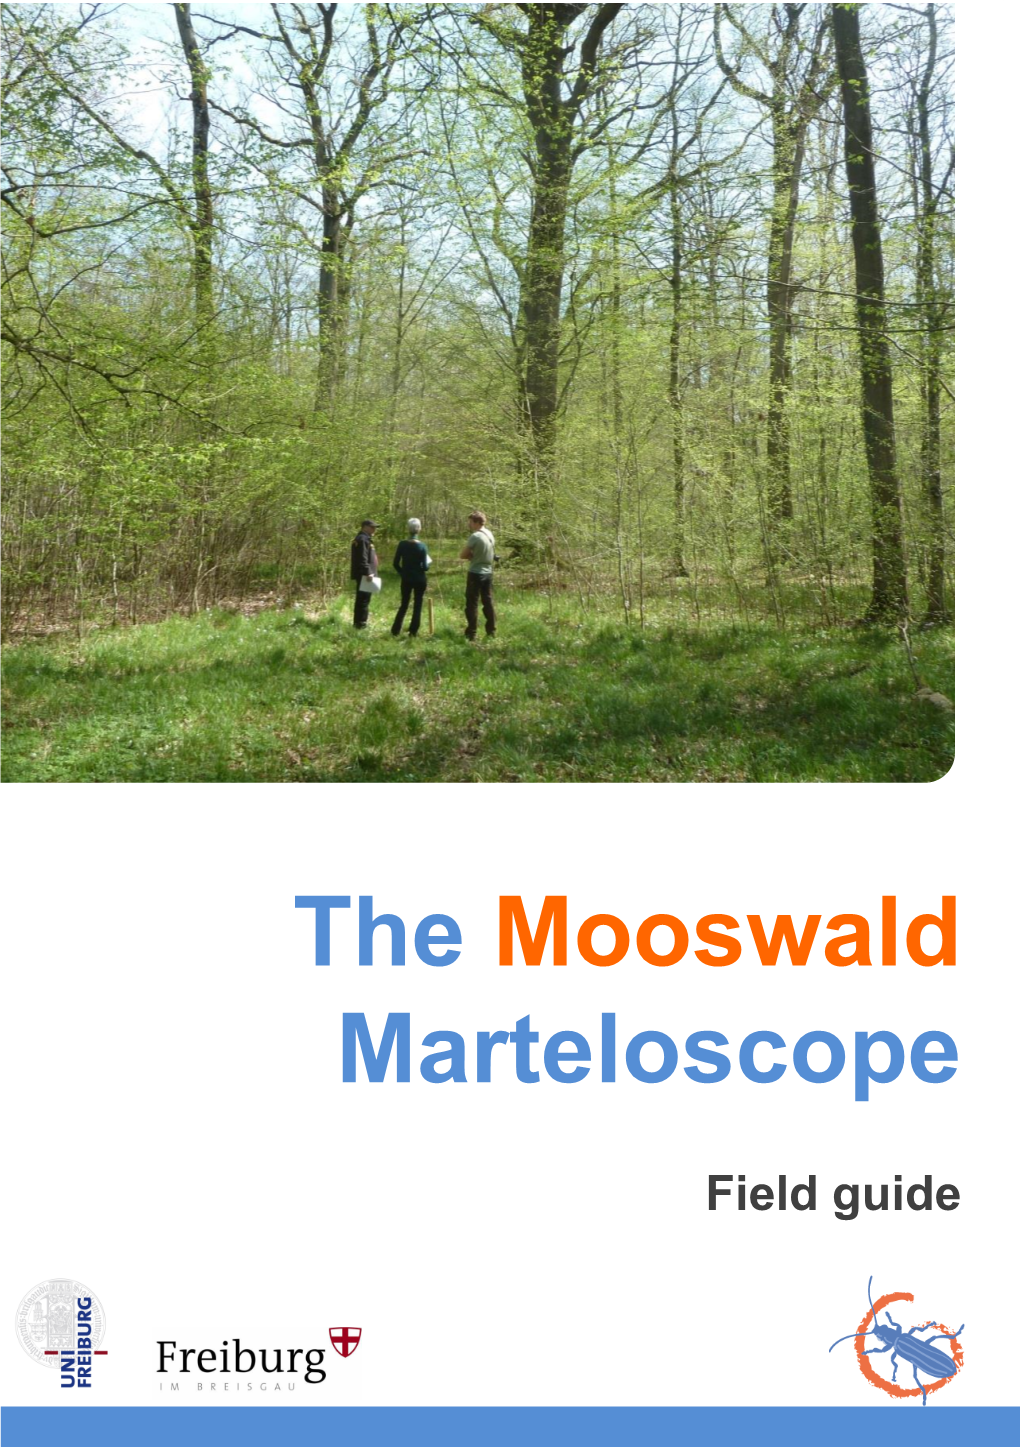 The Mooswald Marteloscope